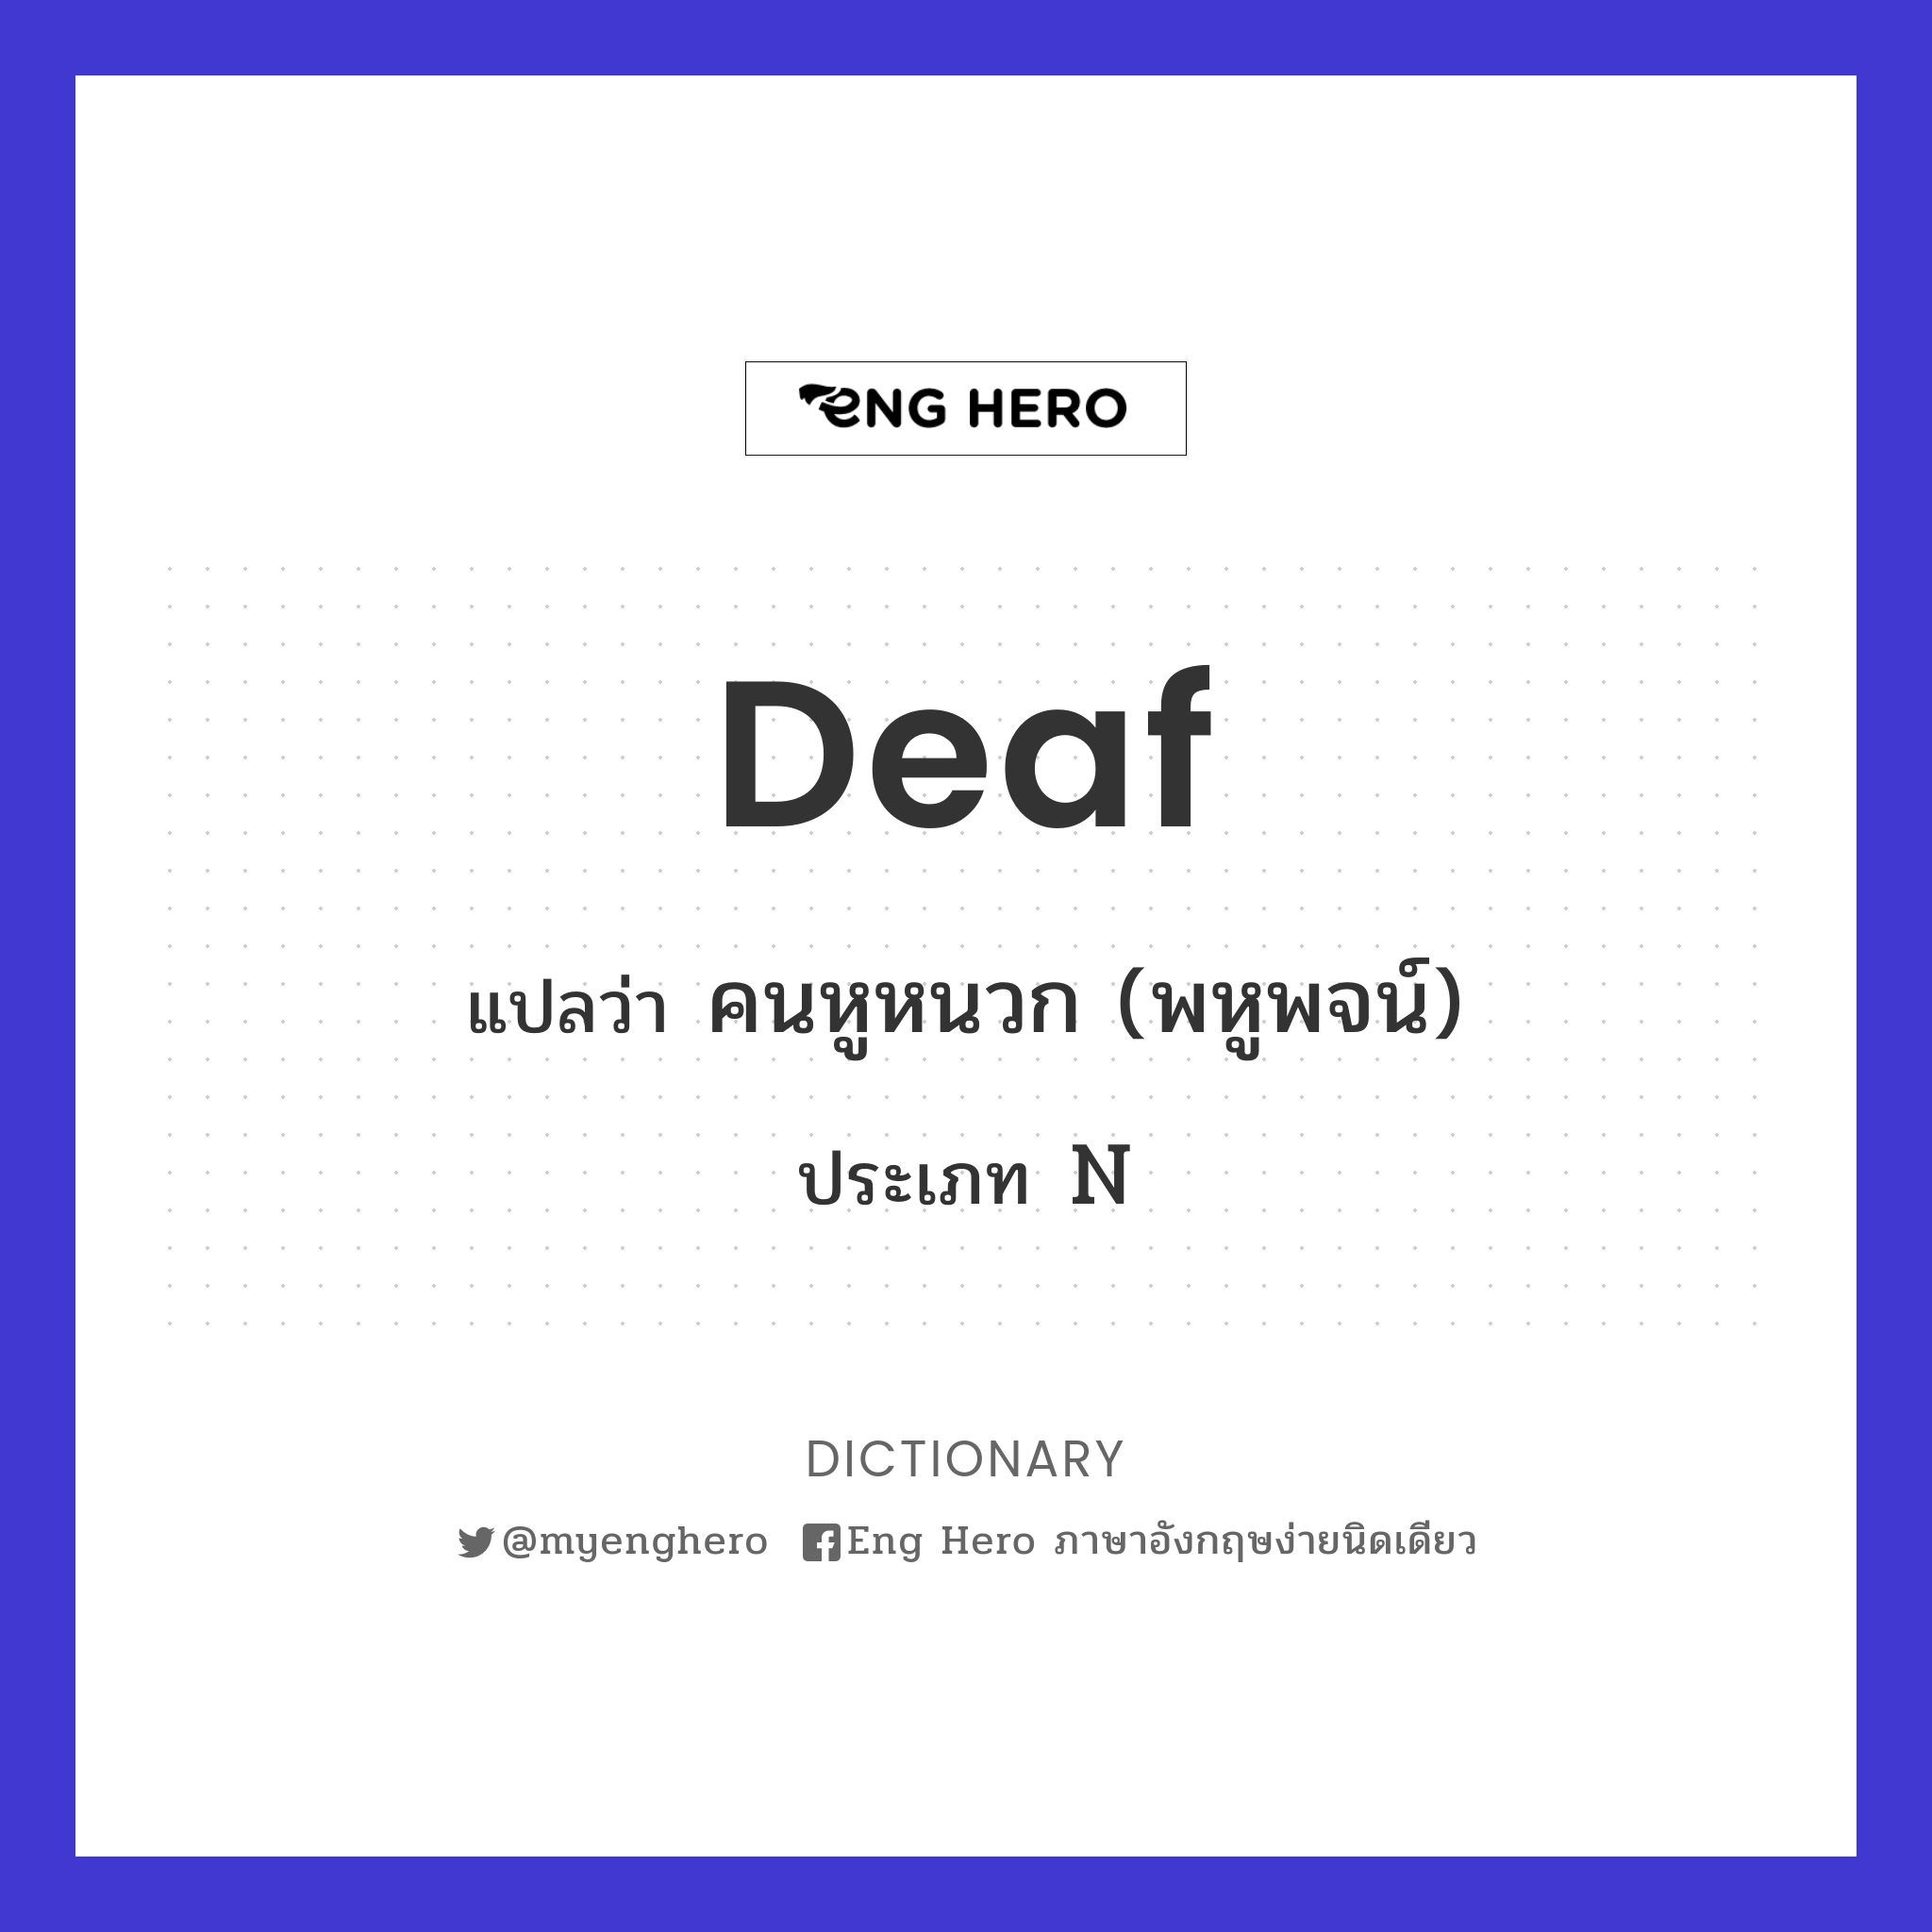 deaf